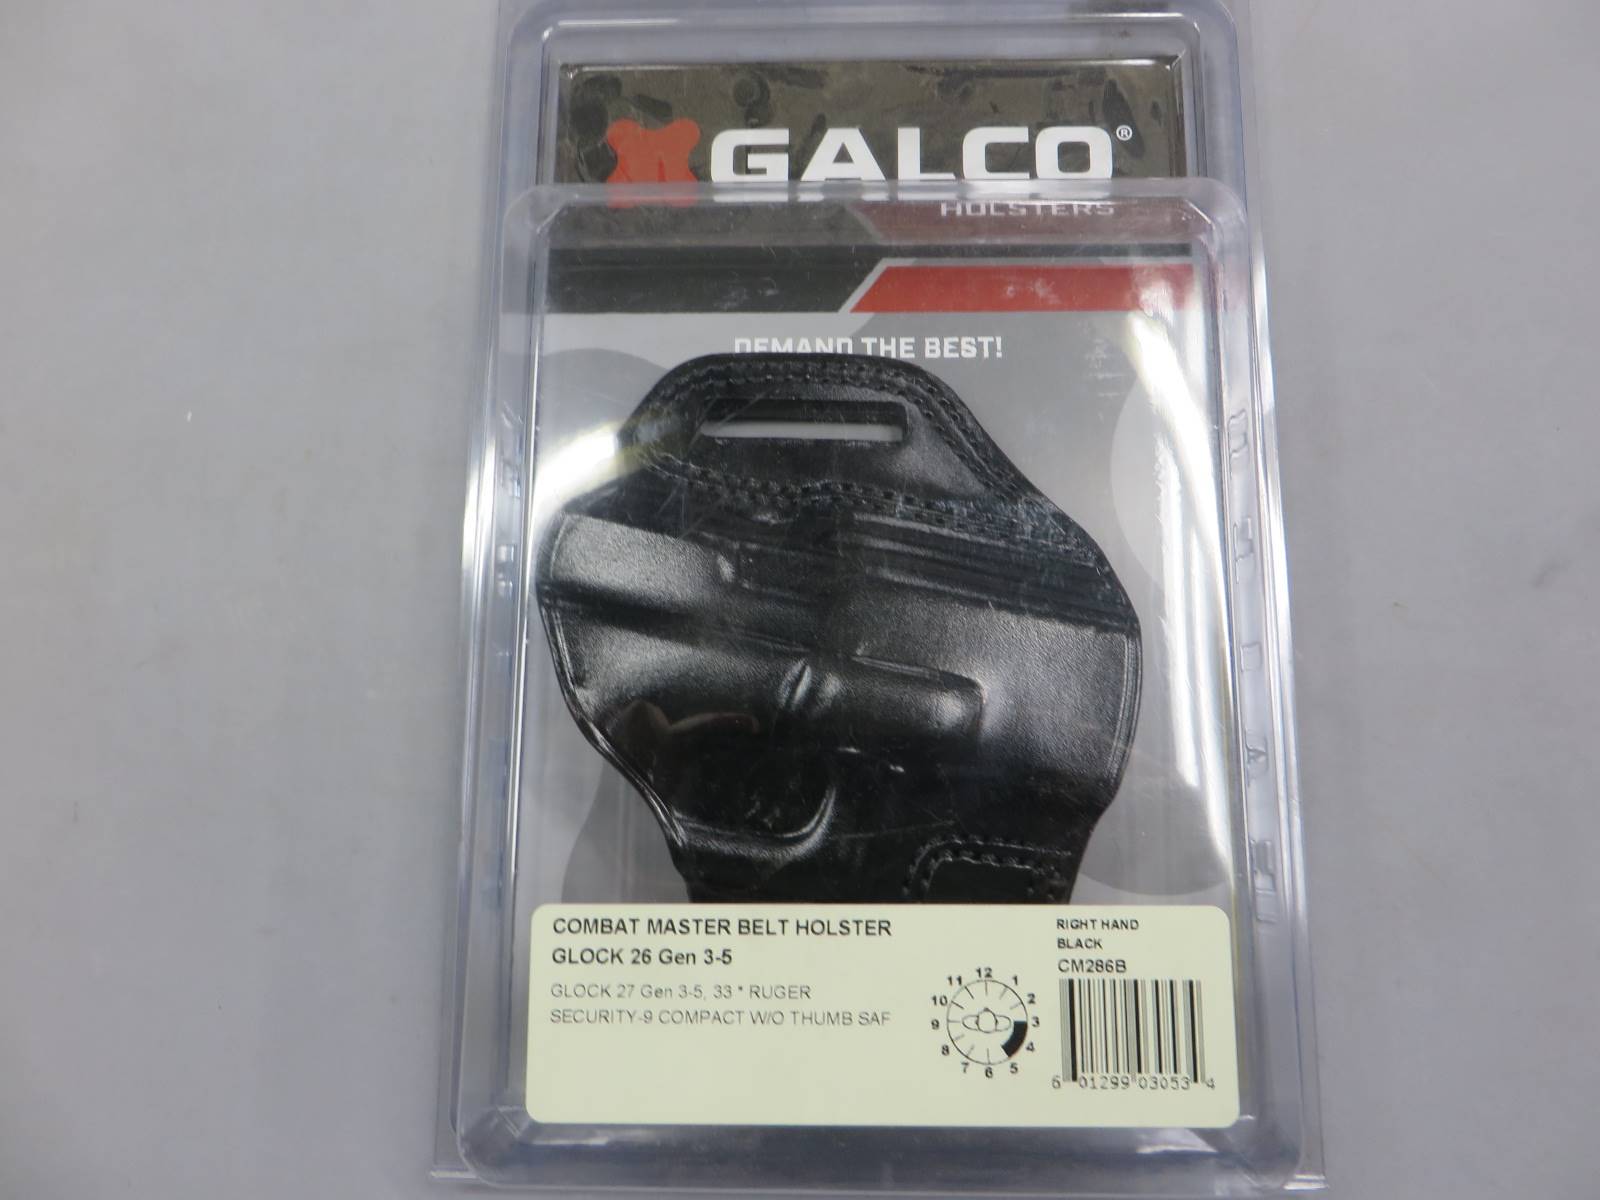 【GALCO】グロック26・G26 コンバットマスター ベルトホルスター